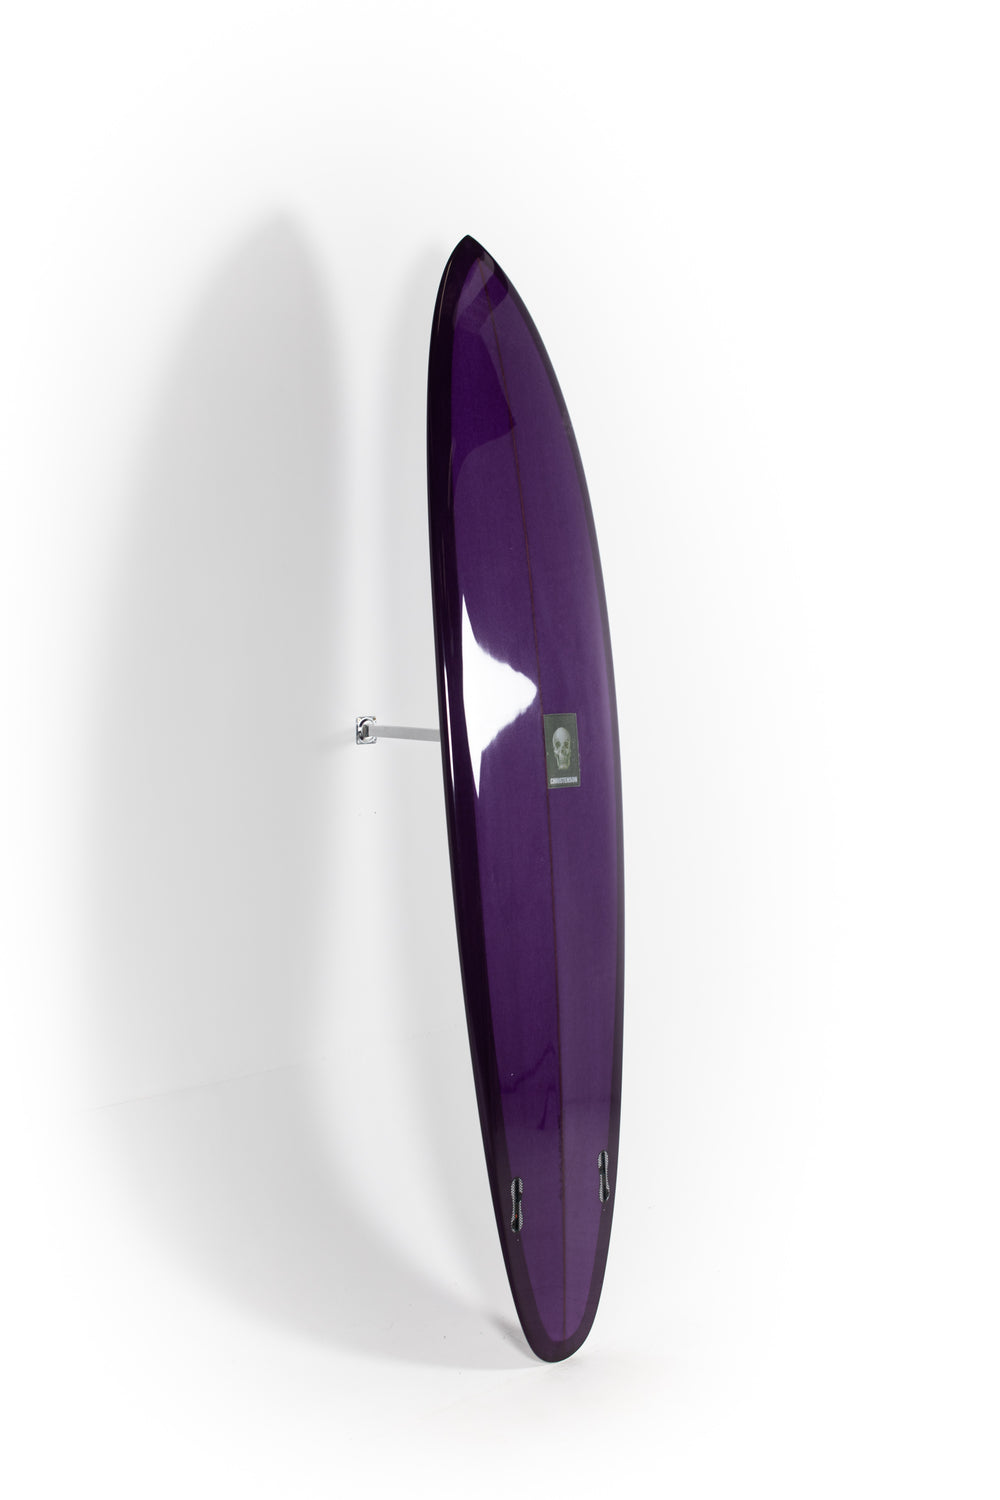 Christenson Surfboards - TWIN TRACKER - 7'6